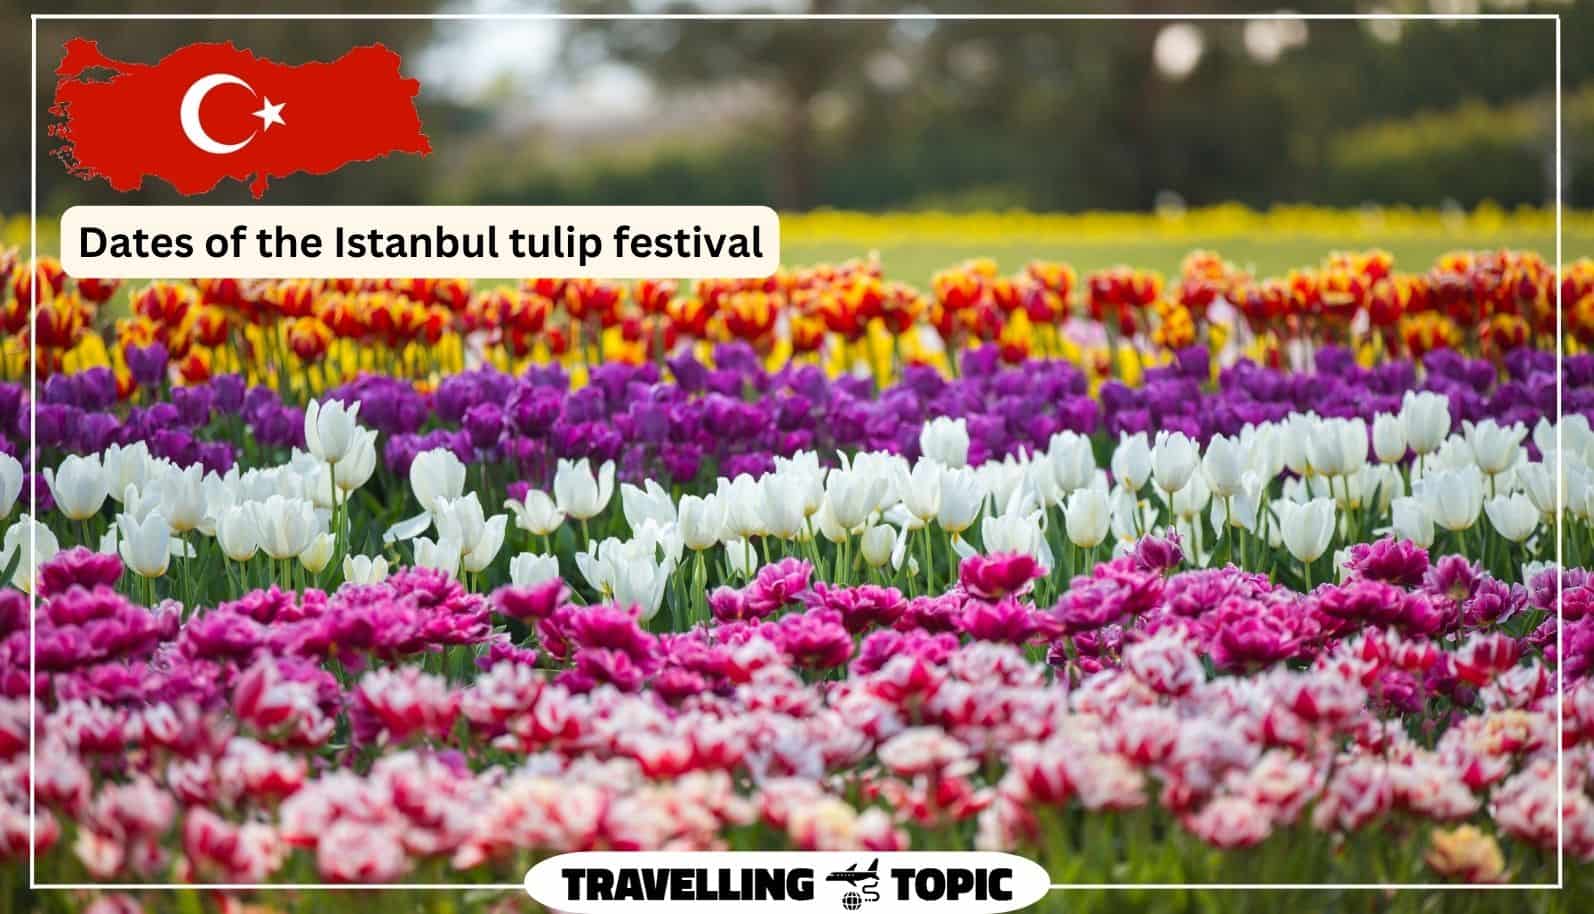 Dates of the Istanbul tulip festival